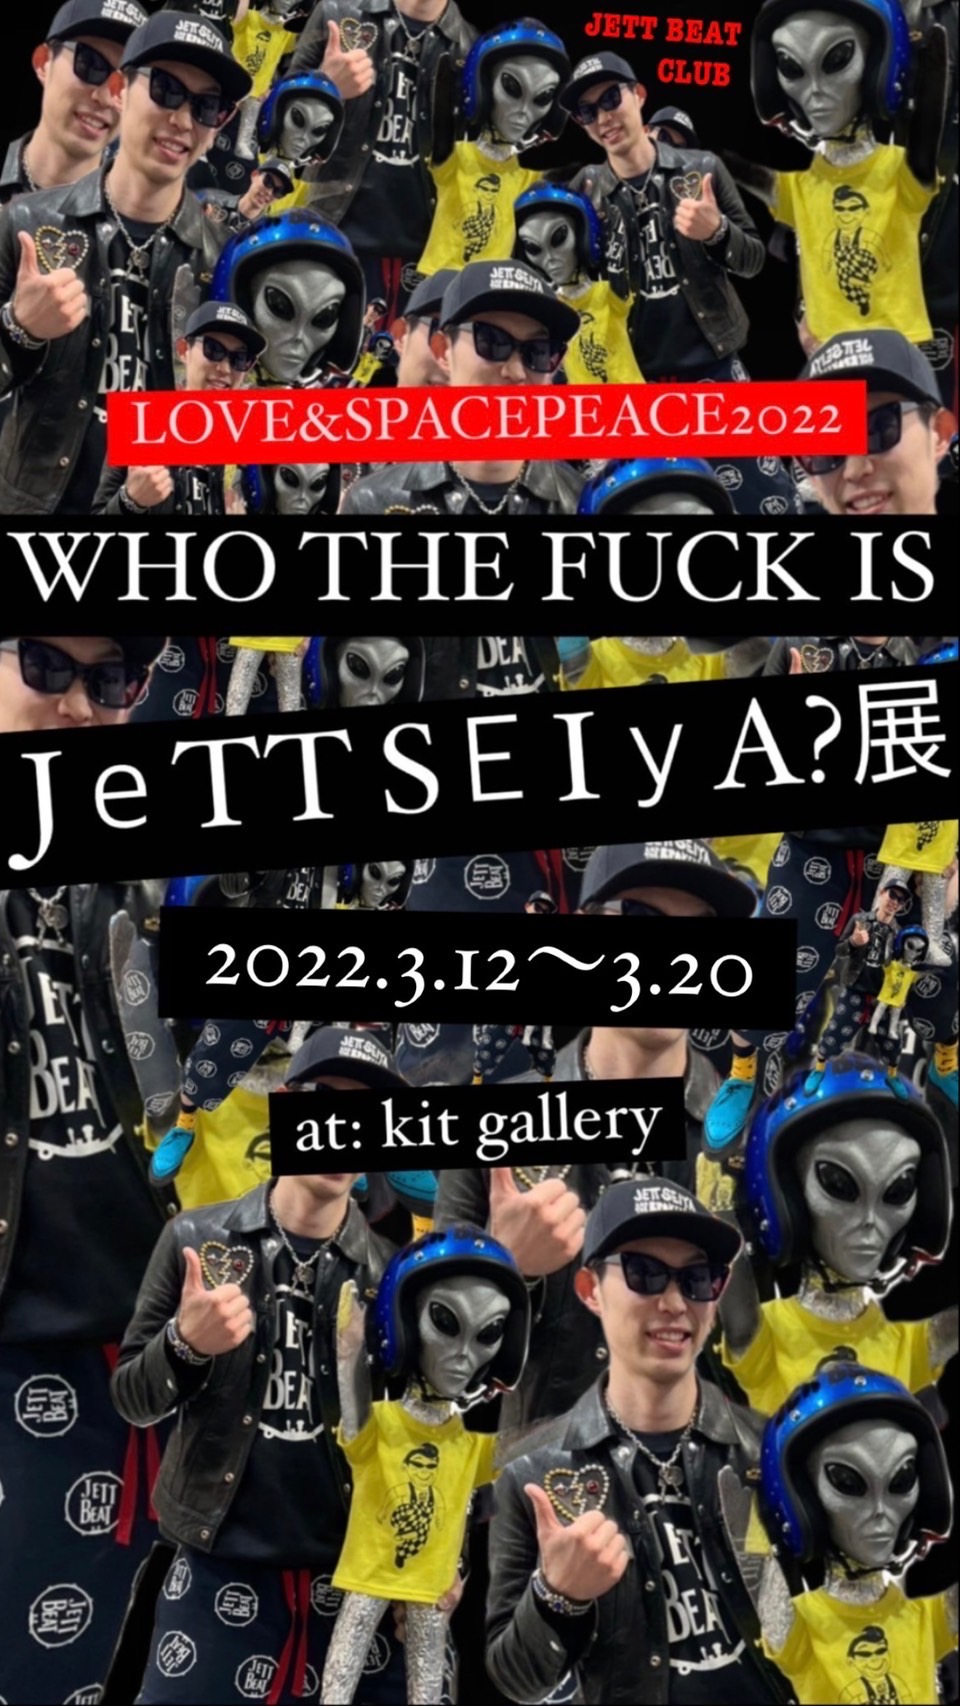 https://kit-gallery.com/schedule/files/jettseiya_kit.JPG